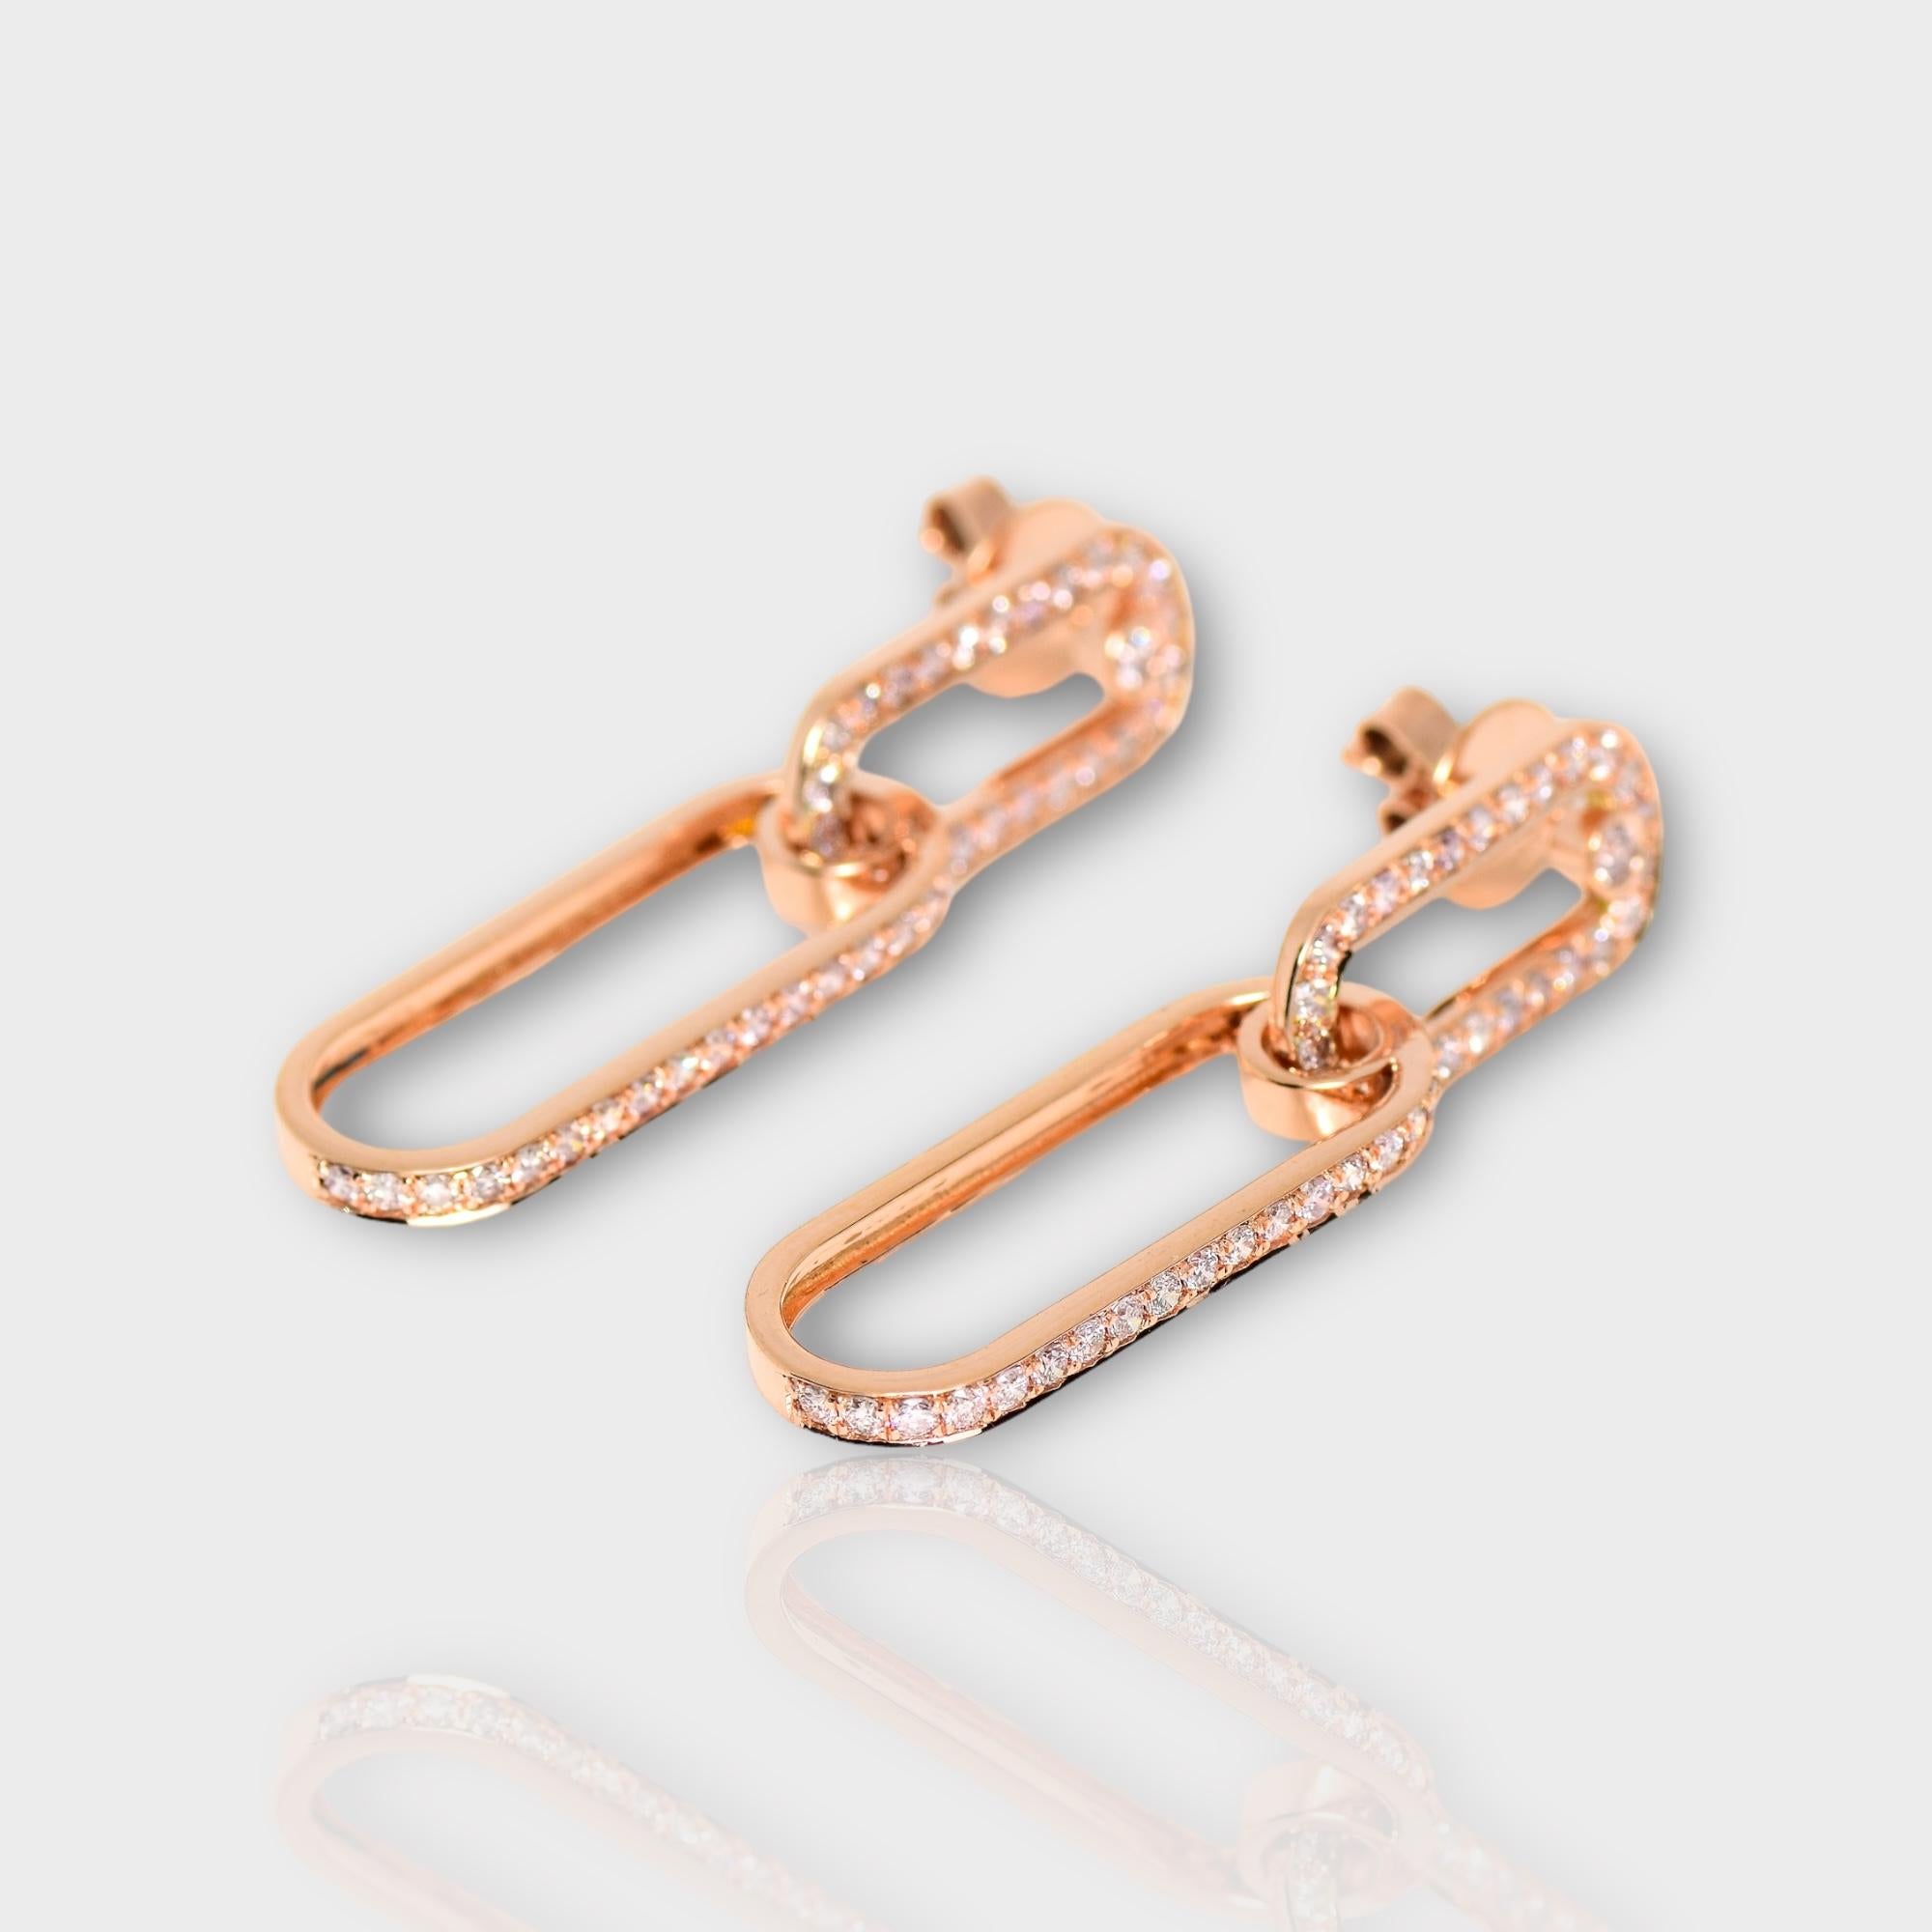 IGI 14K 1.15 ct Natural Pink Diamonds Art Deco Design Stud Earrings For Sale 1